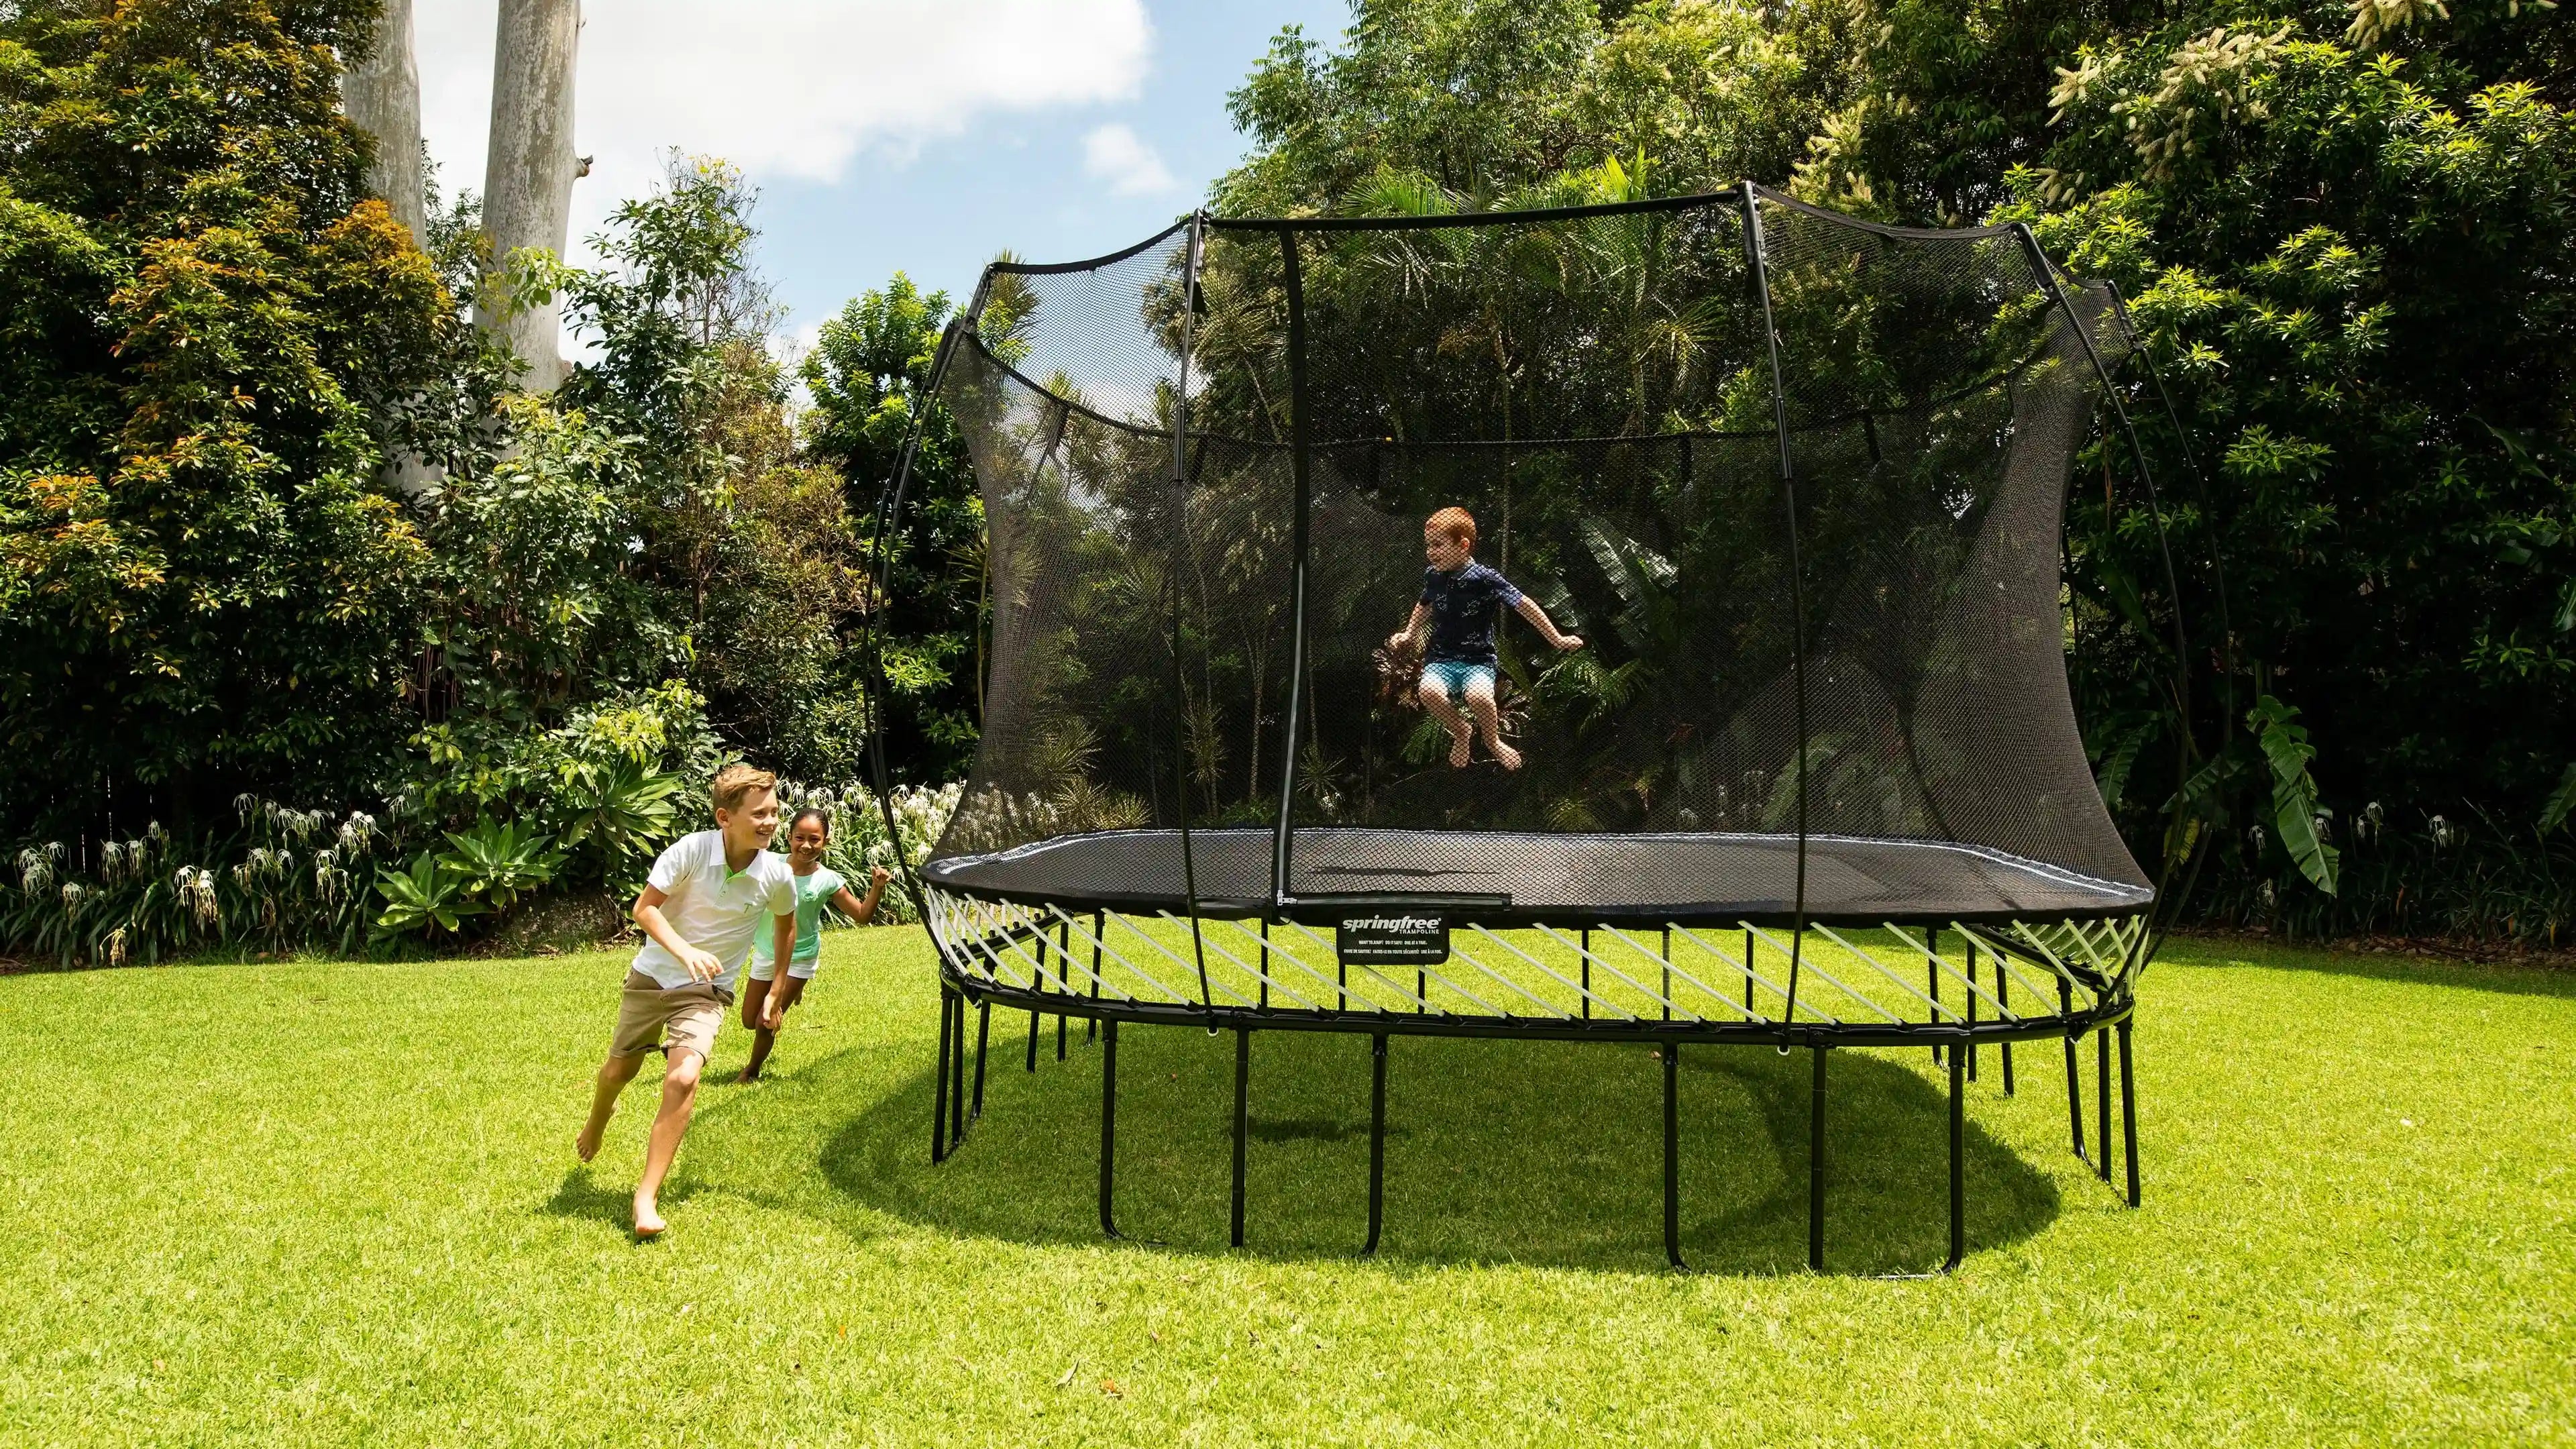 Kids playing around a trampoline